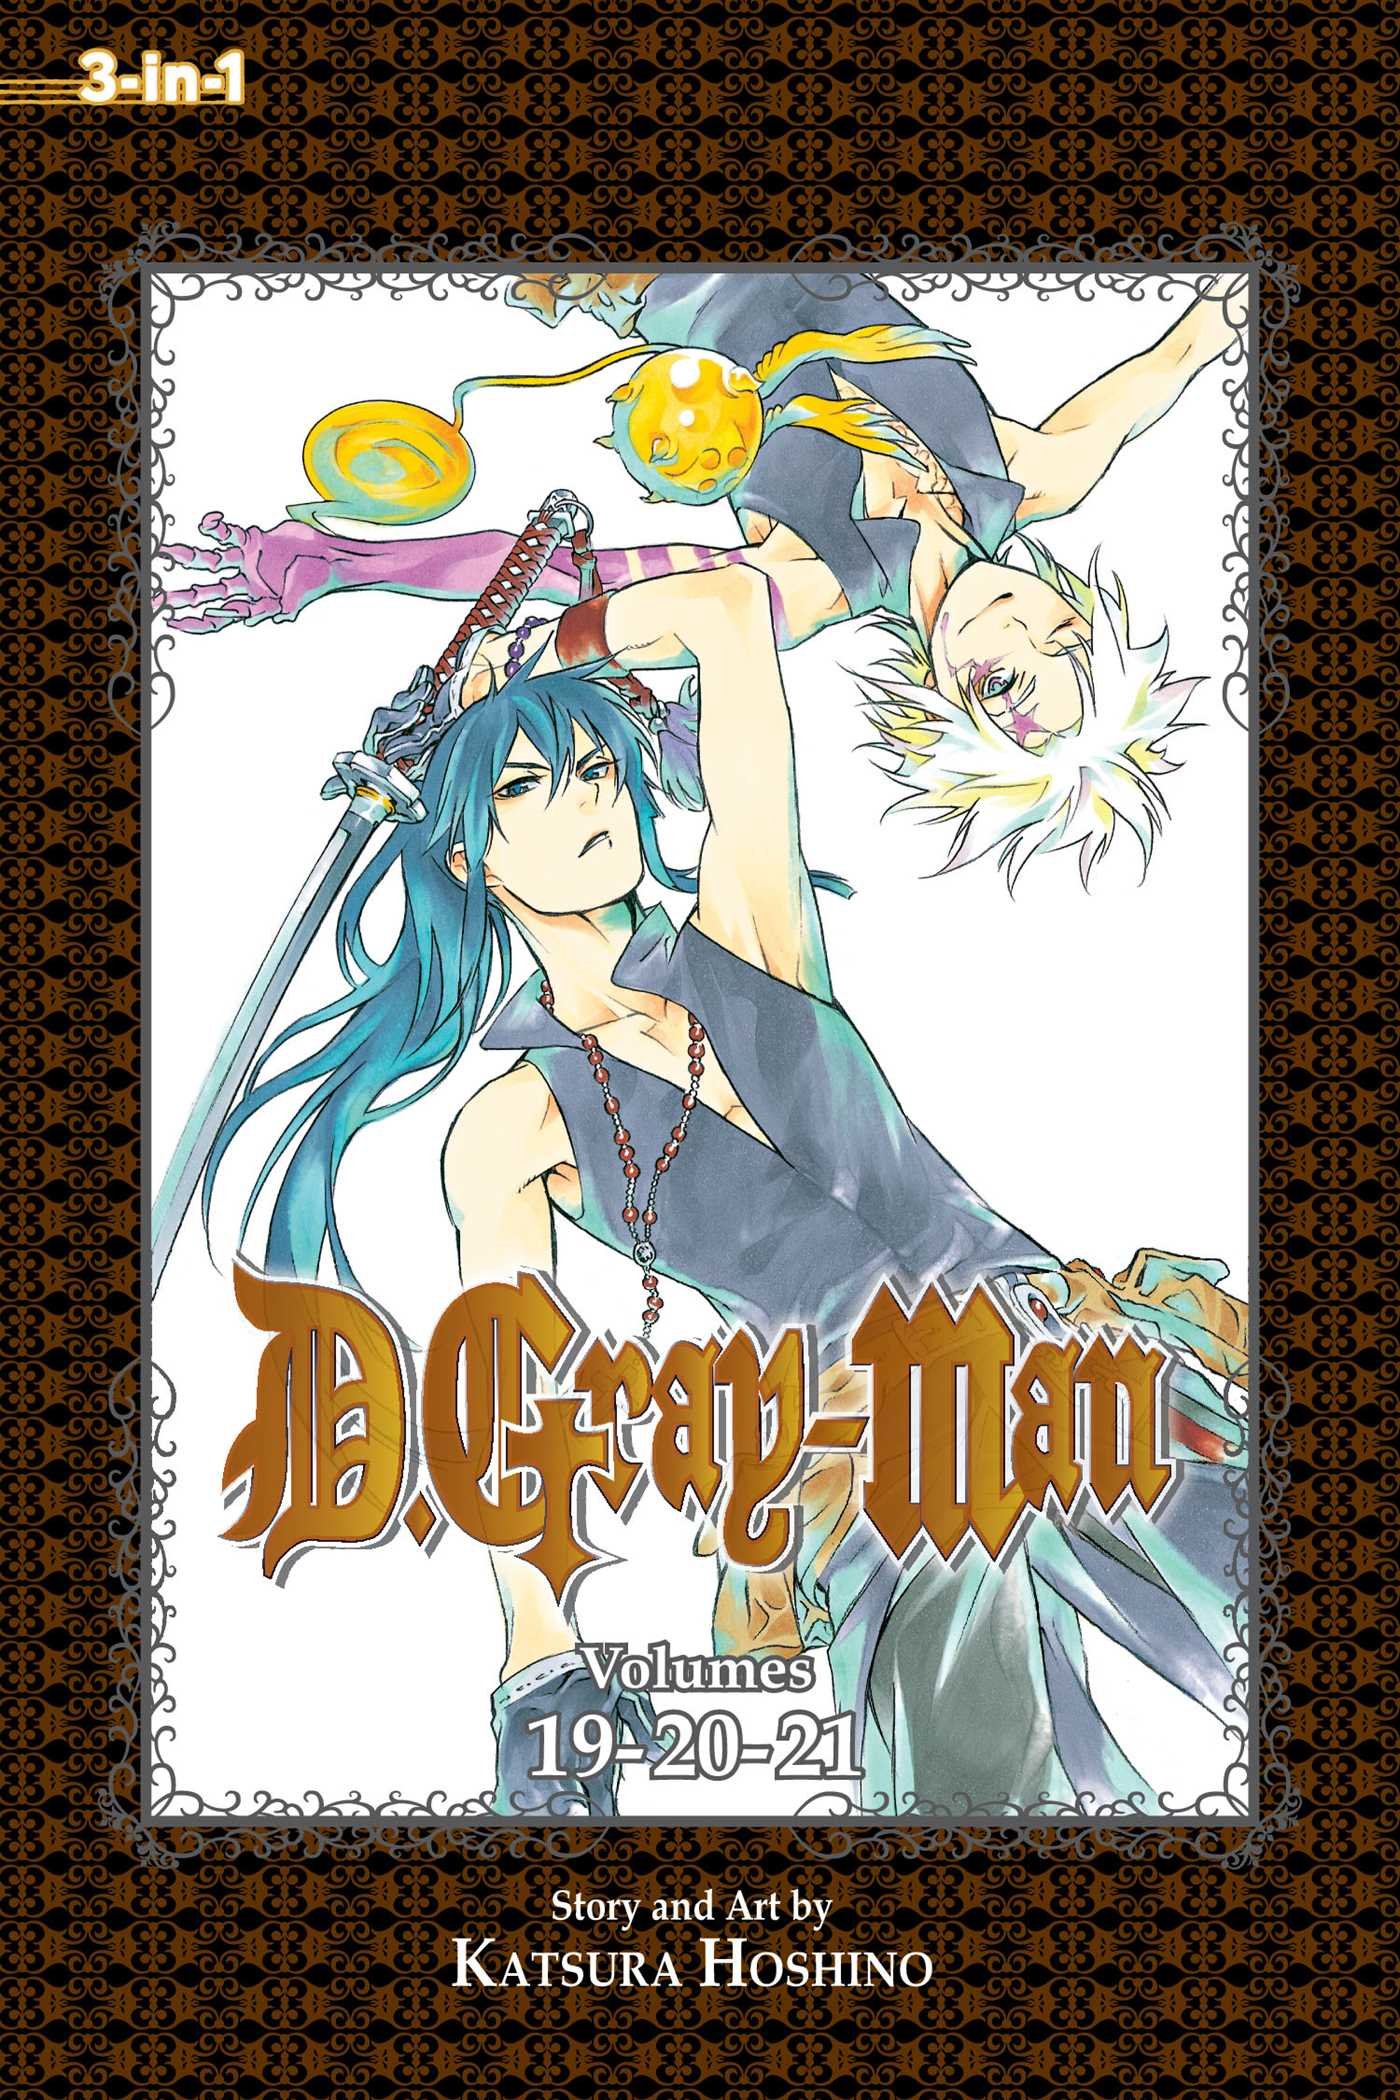 D.Gray-man (3-in-1 Edition) Vol. 7 | Katsura Hoshino